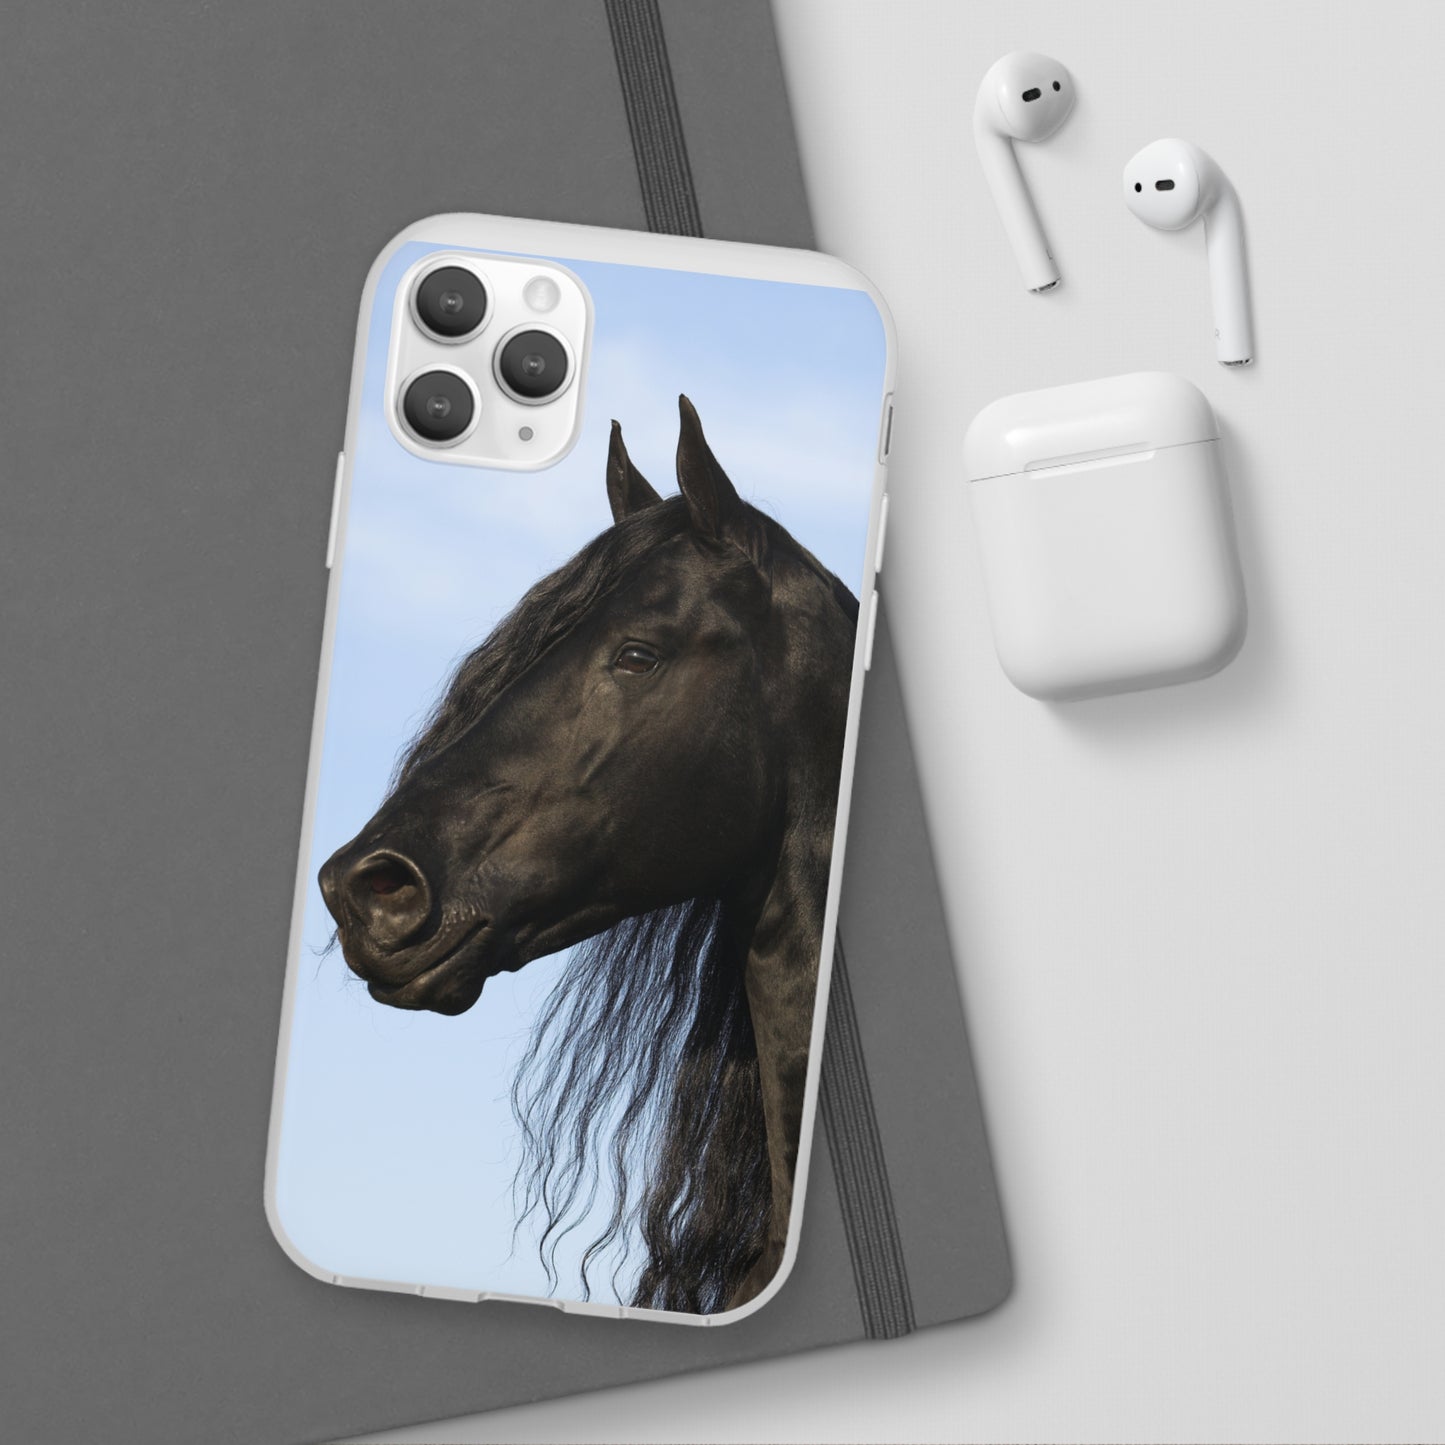 Black Horse Phone Case